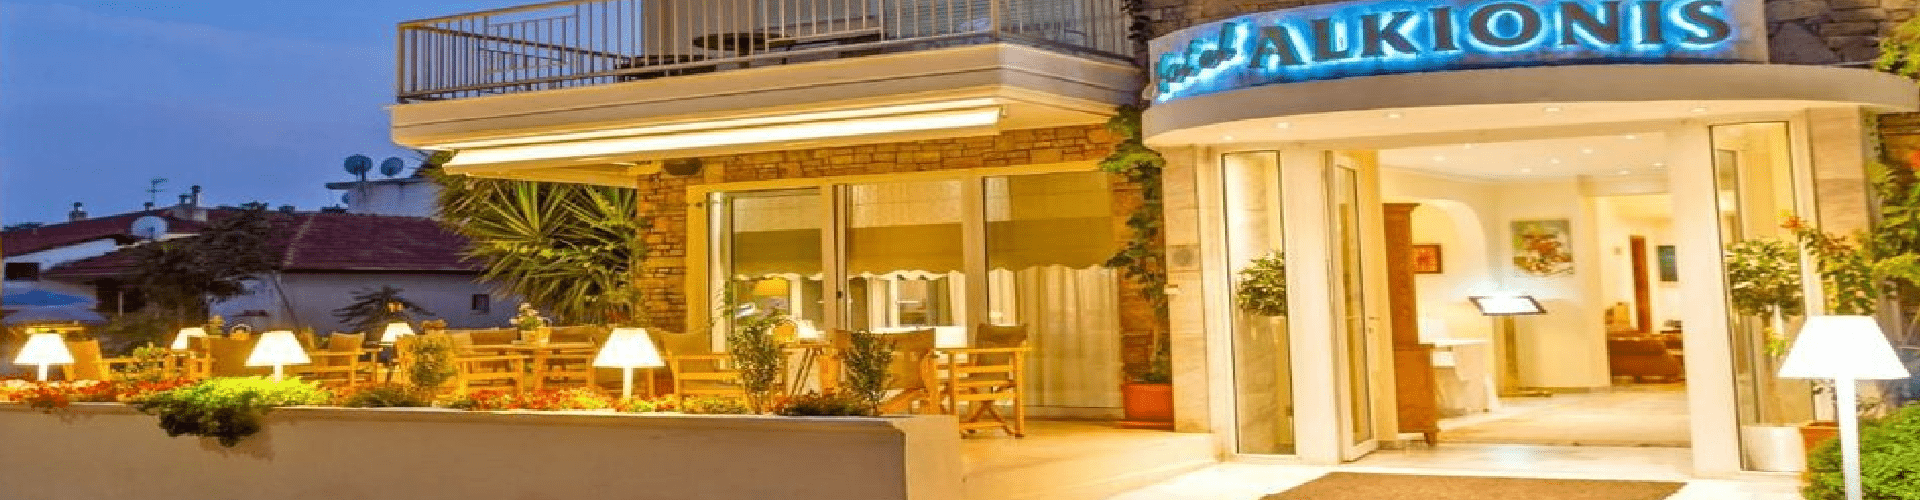 Hotel Alkyonis-Nea Kalikraia,Halkidiki, Grčka